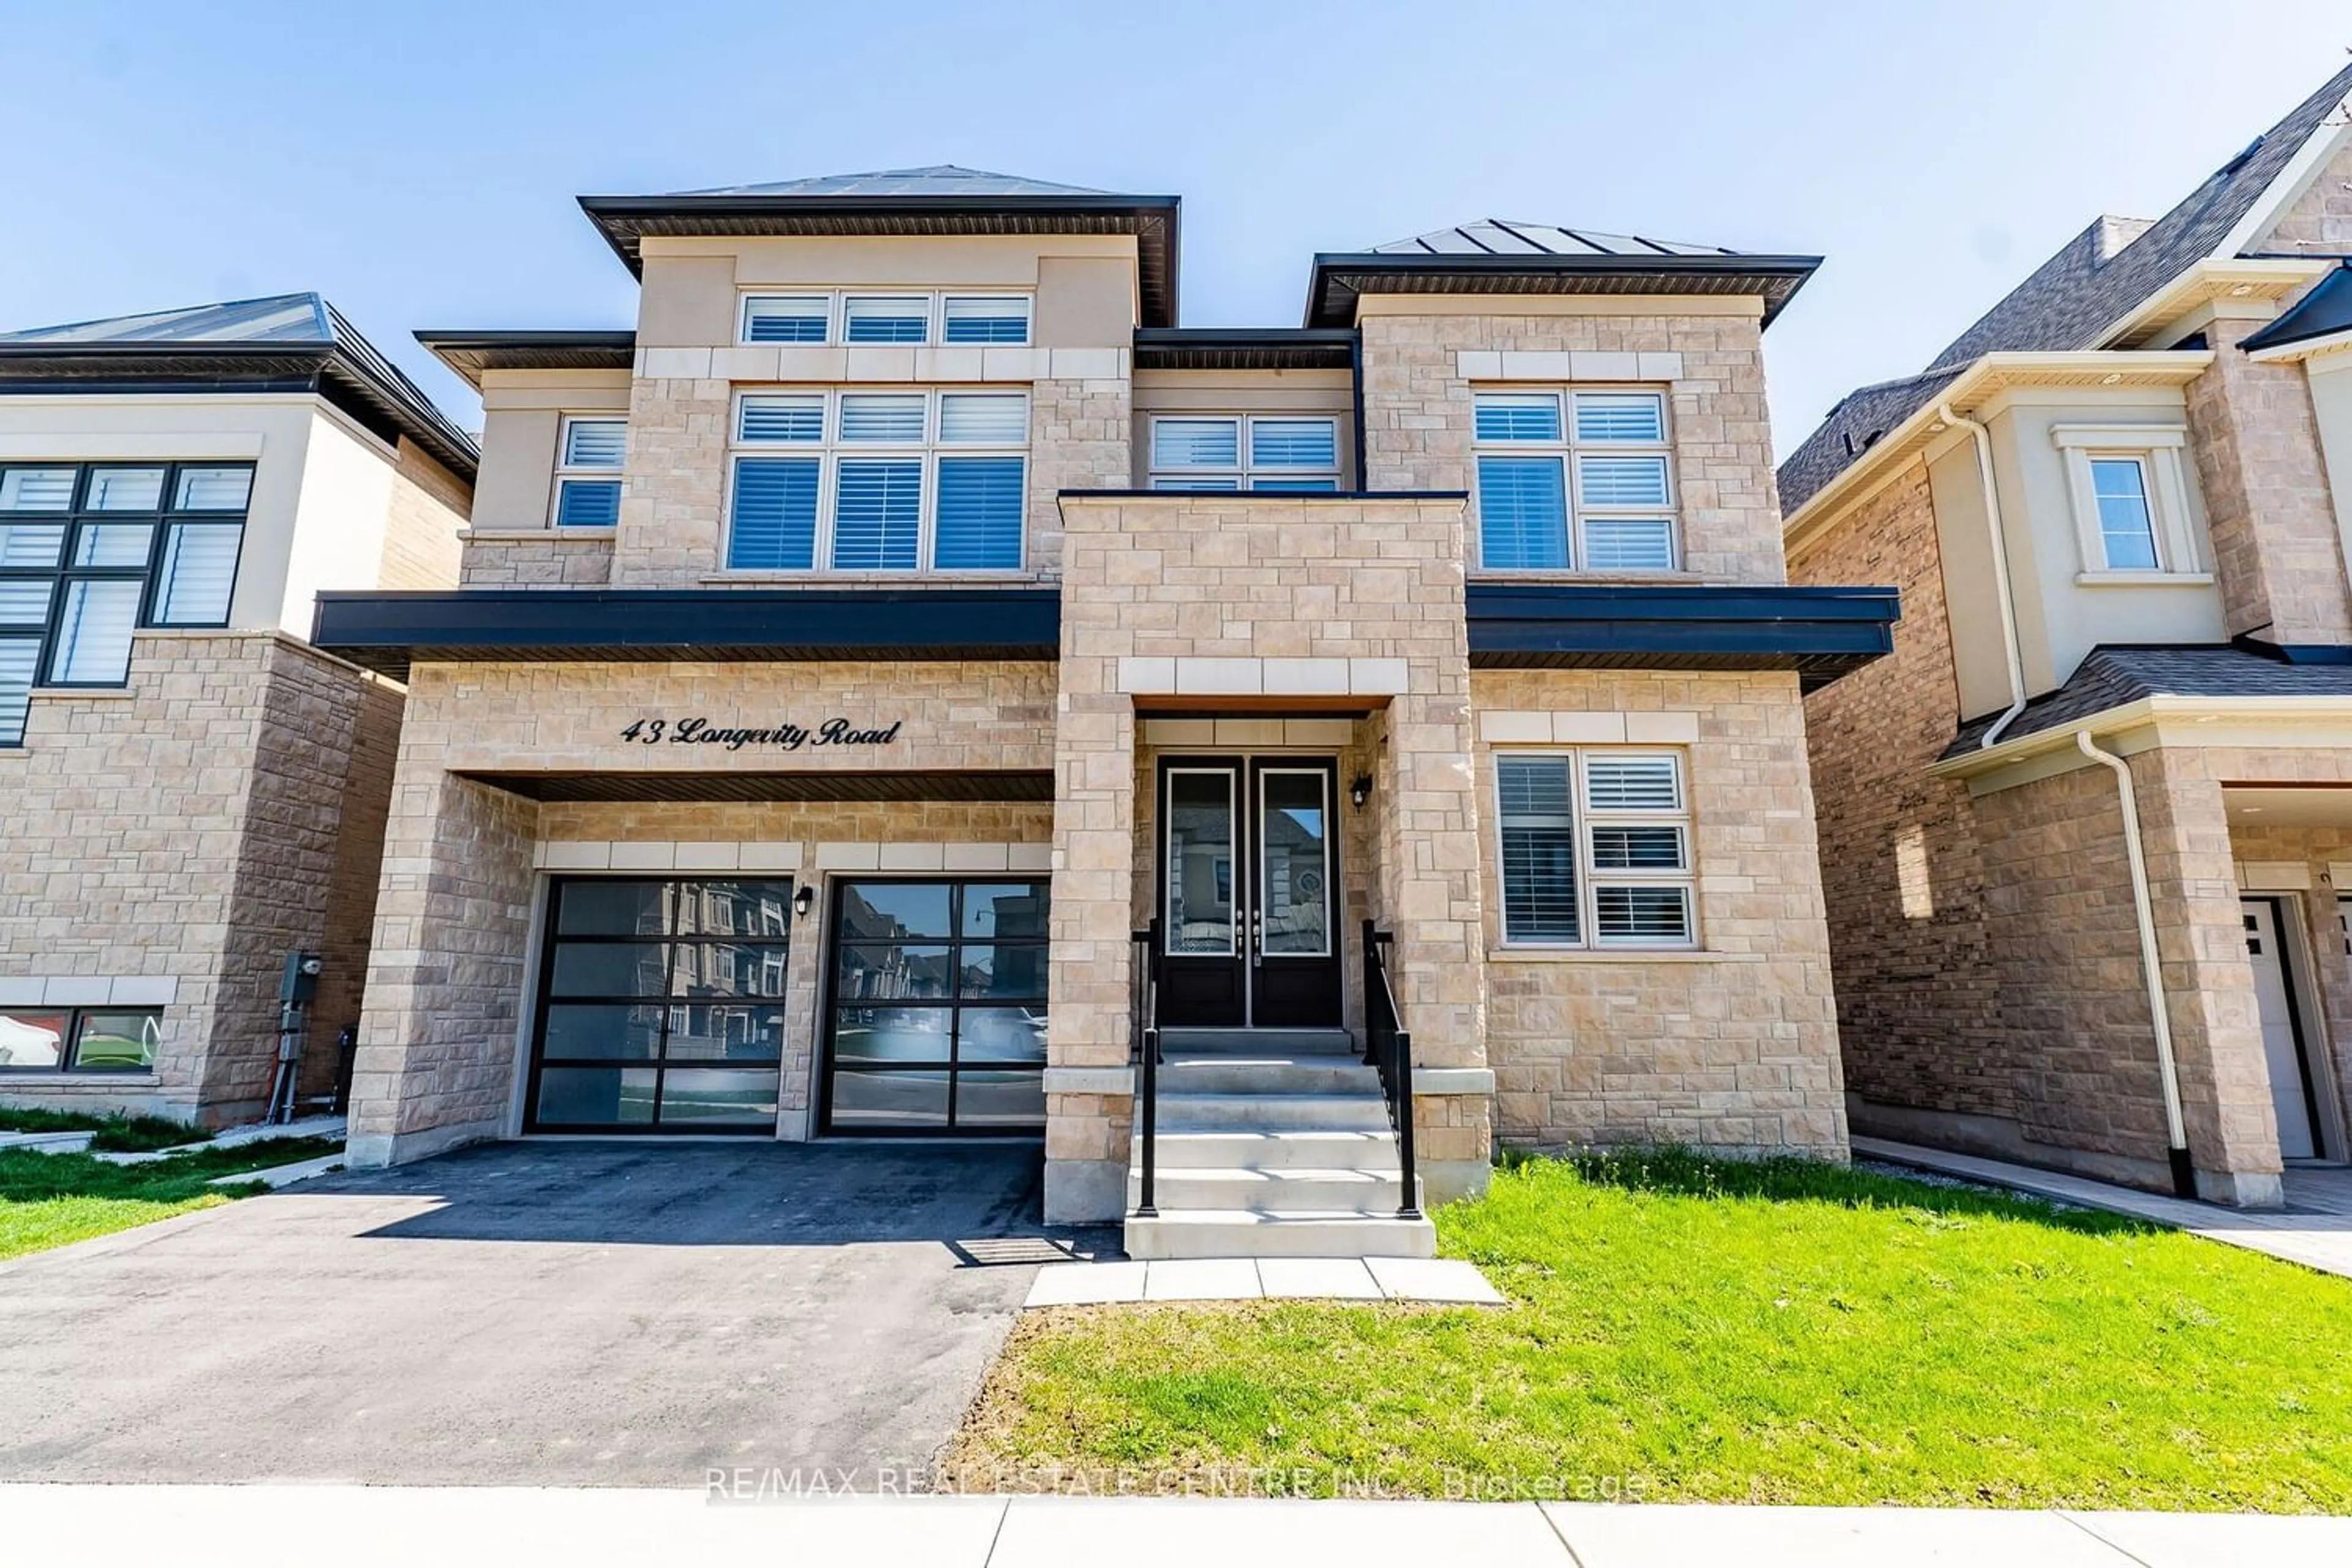 Home with brick exterior material for 43 Longevity Rd, Brampton Ontario L6X 5P3